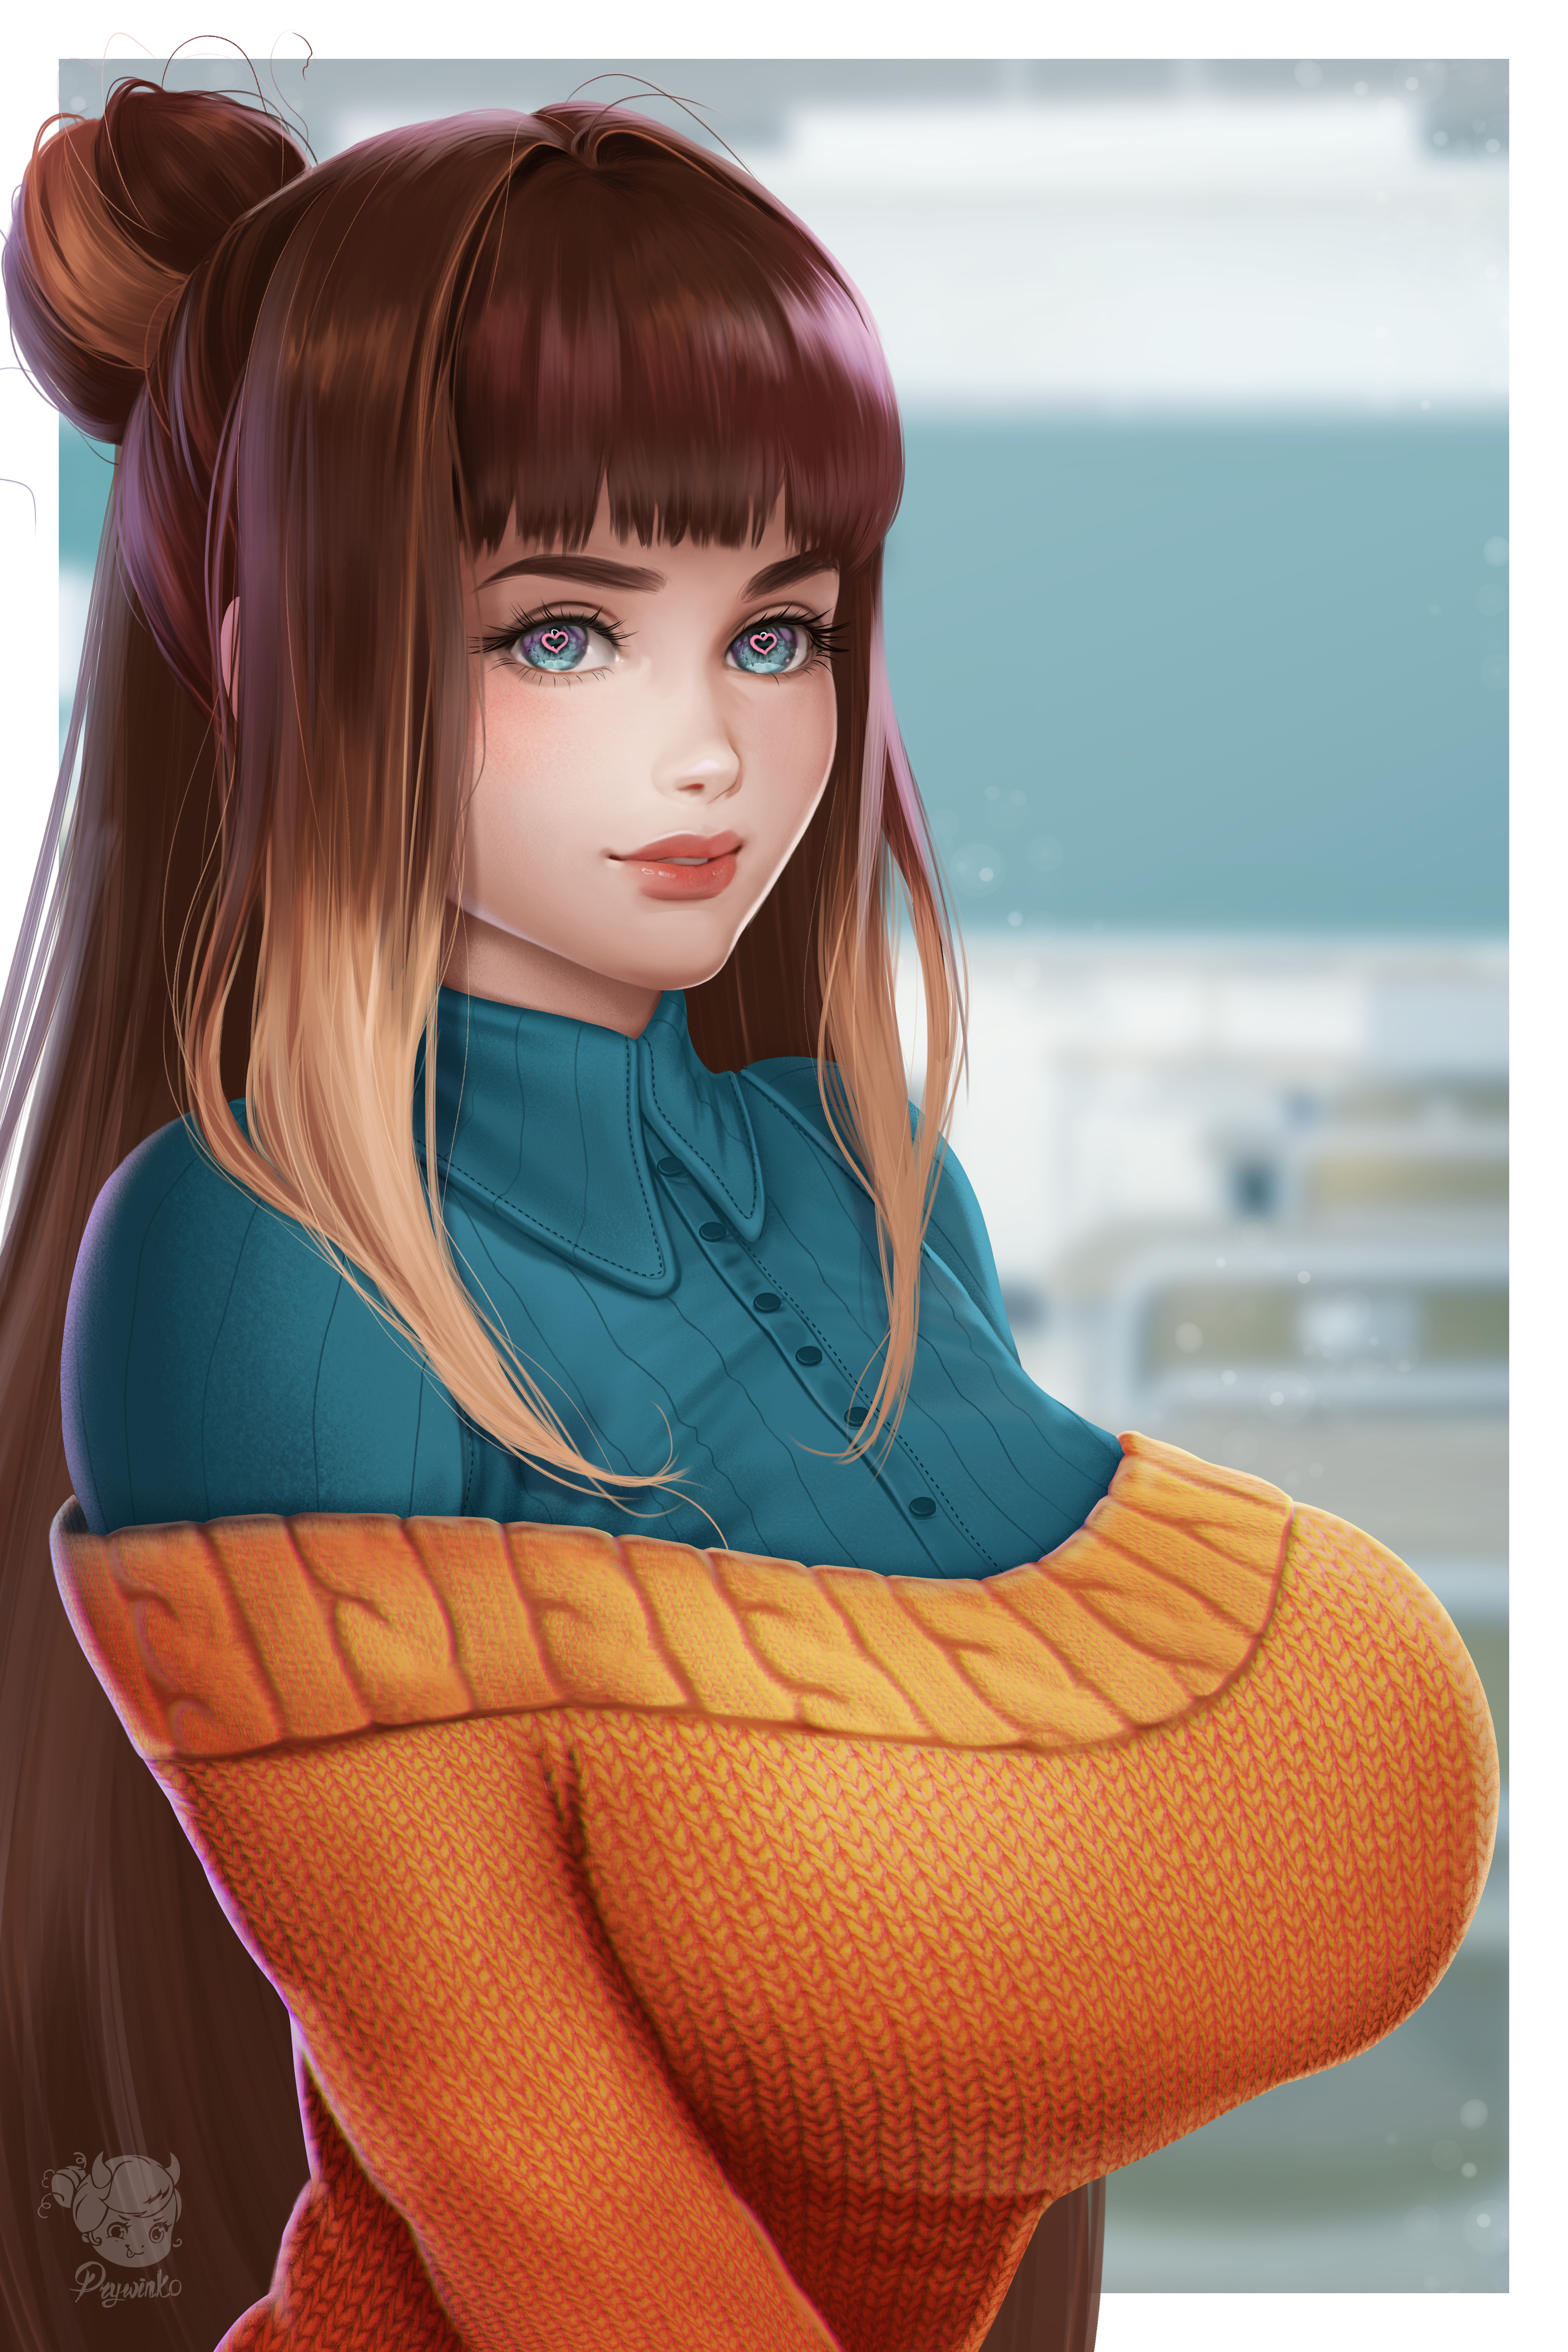 Original Characters Prywinko Artwork Drawing Shirt Sweater Heart Eyes Long Hair Looking At Viewer Ha 4000x6000